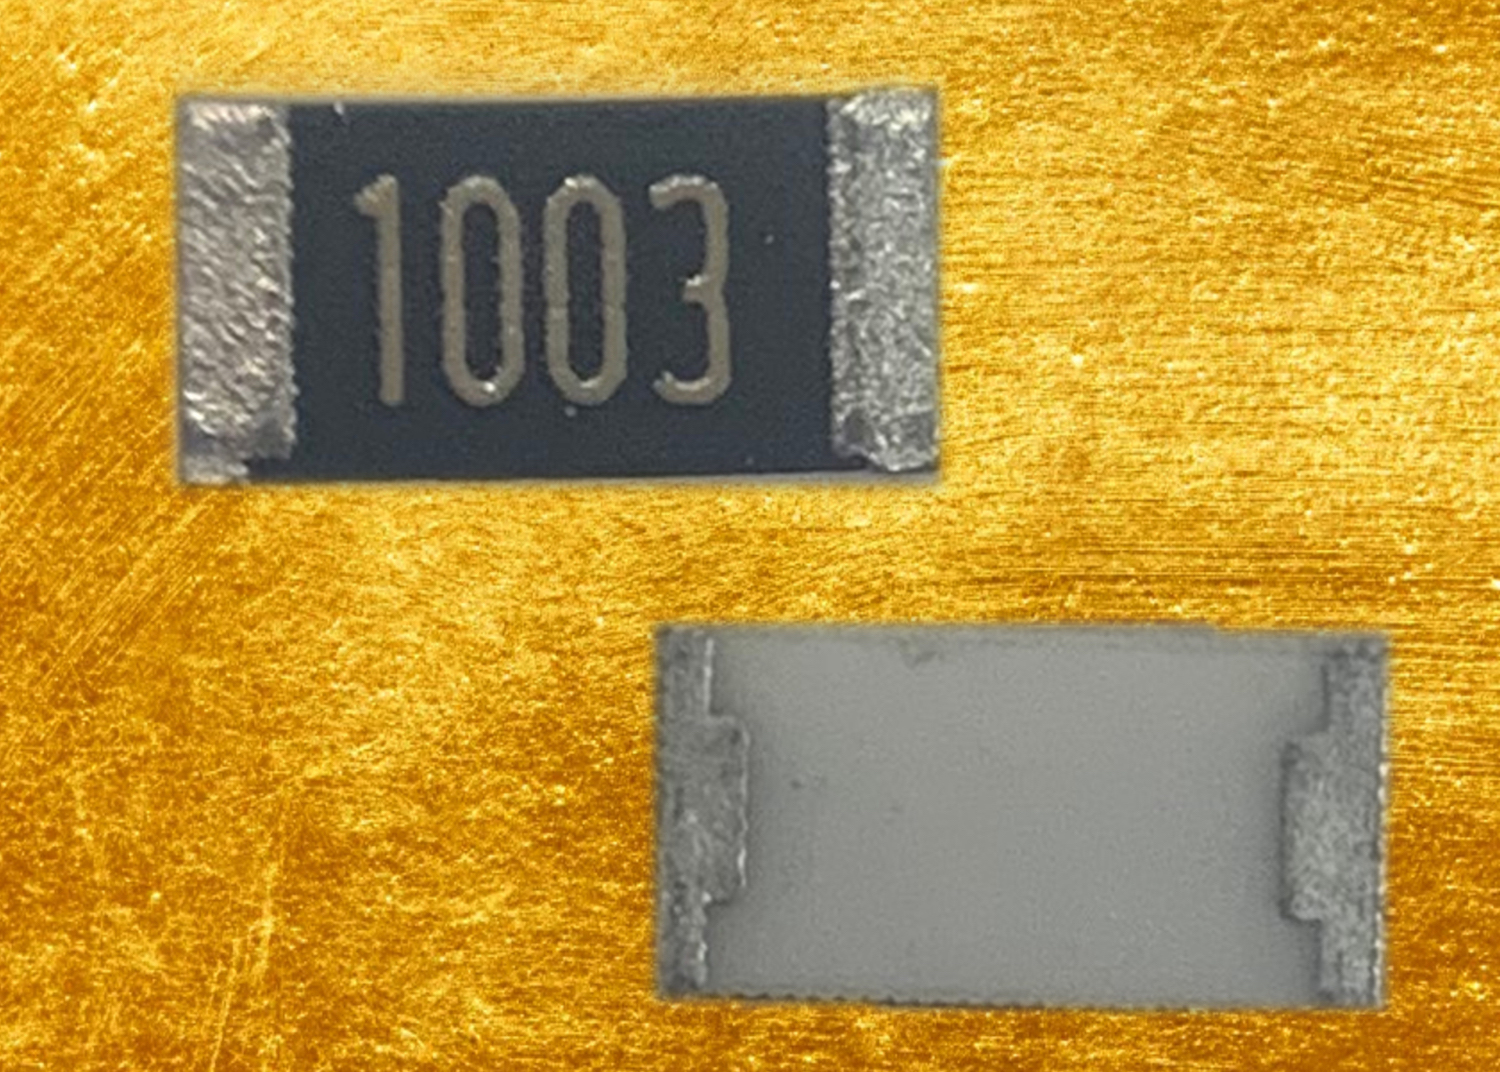 Stackpole Releases Automotive-Grade Chip Resistors